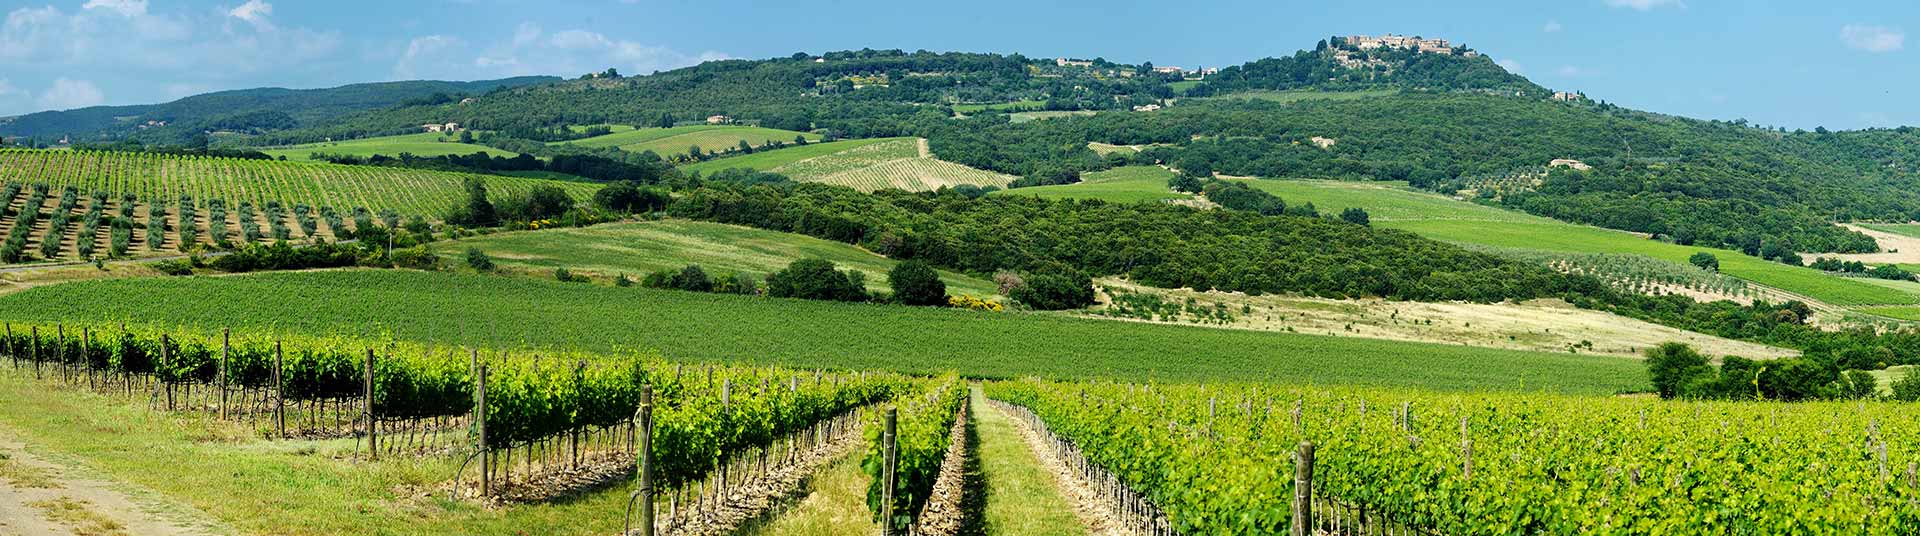 La Bourgogne terres de vignoble